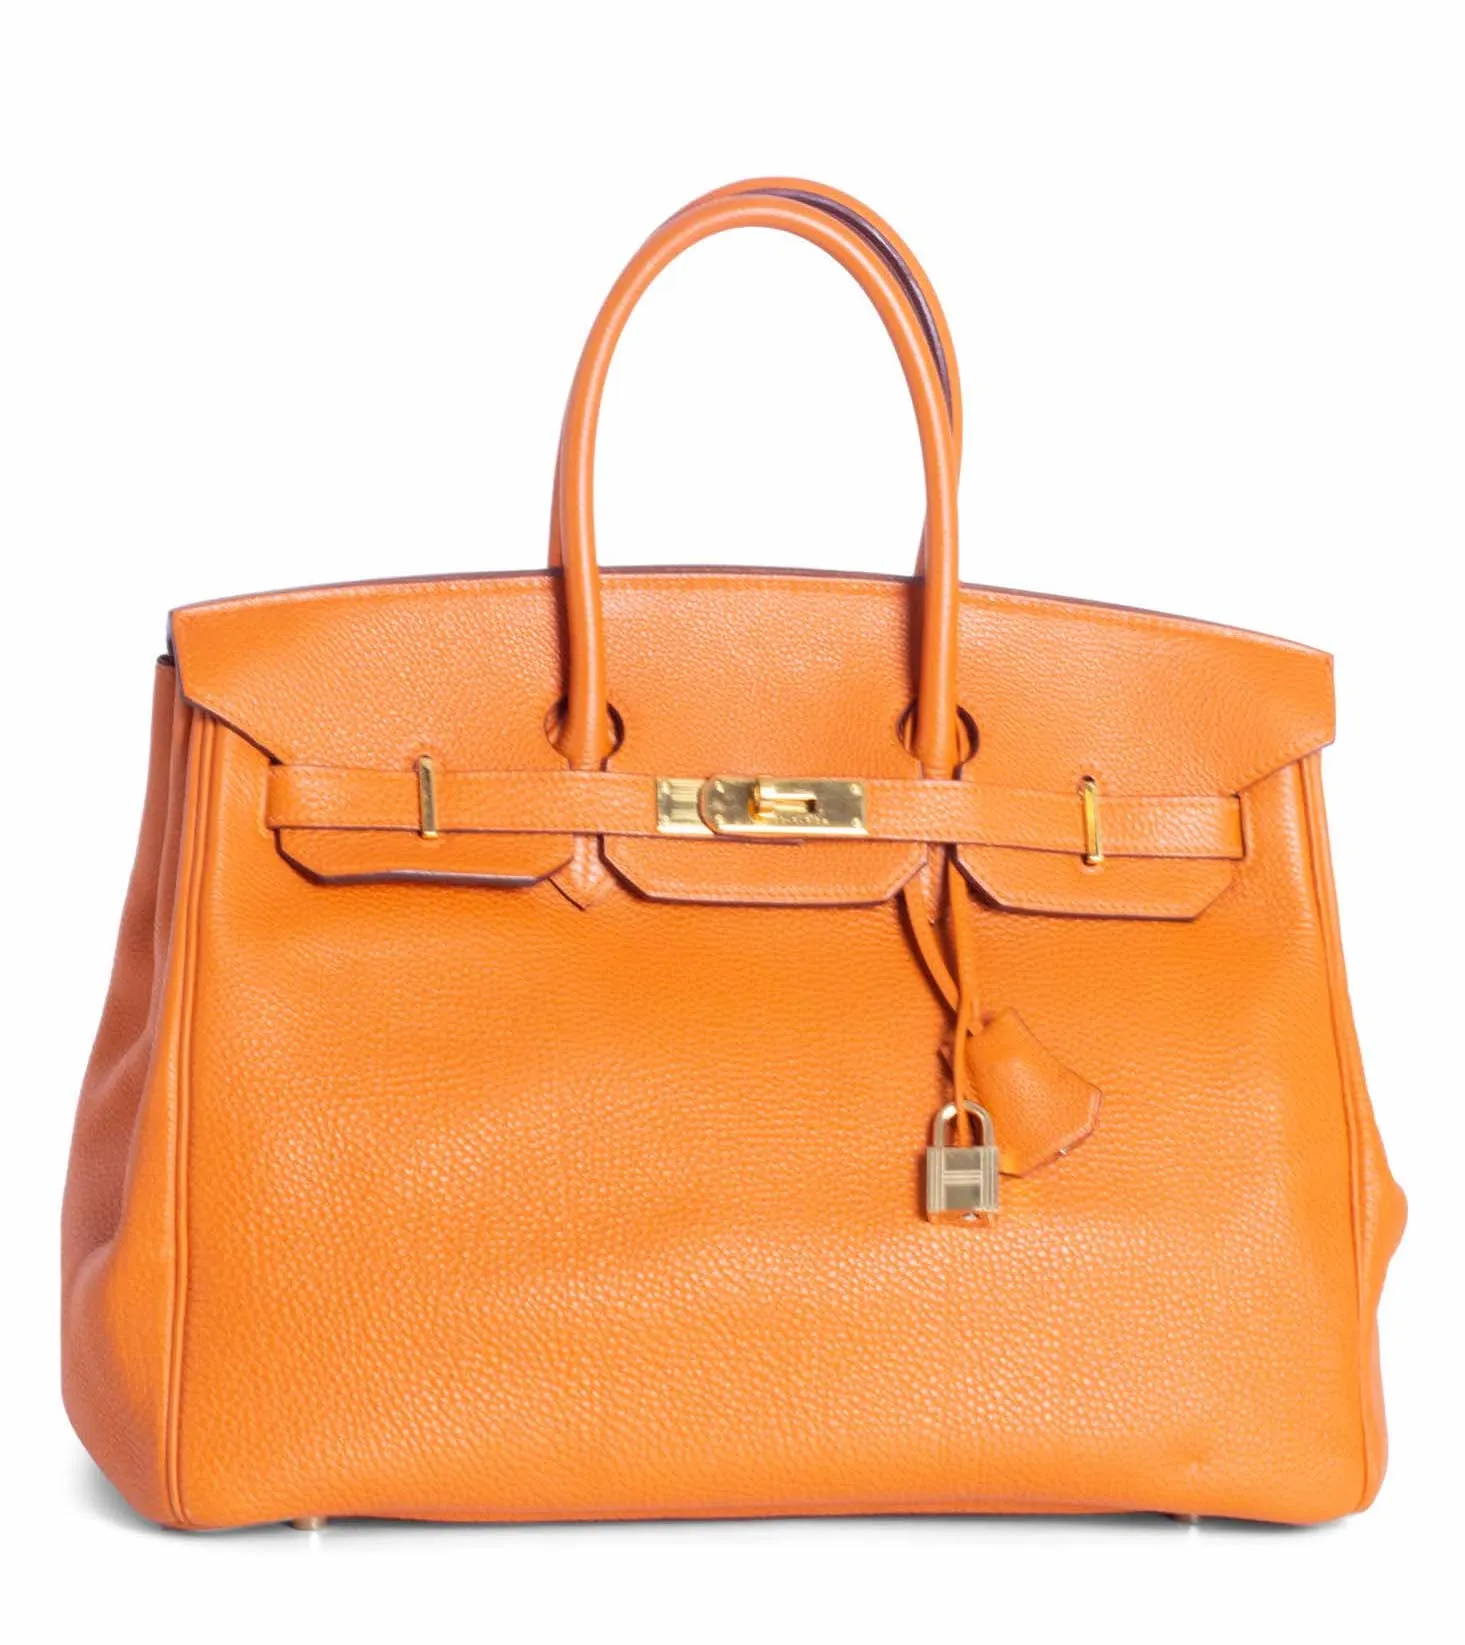 Handbag style